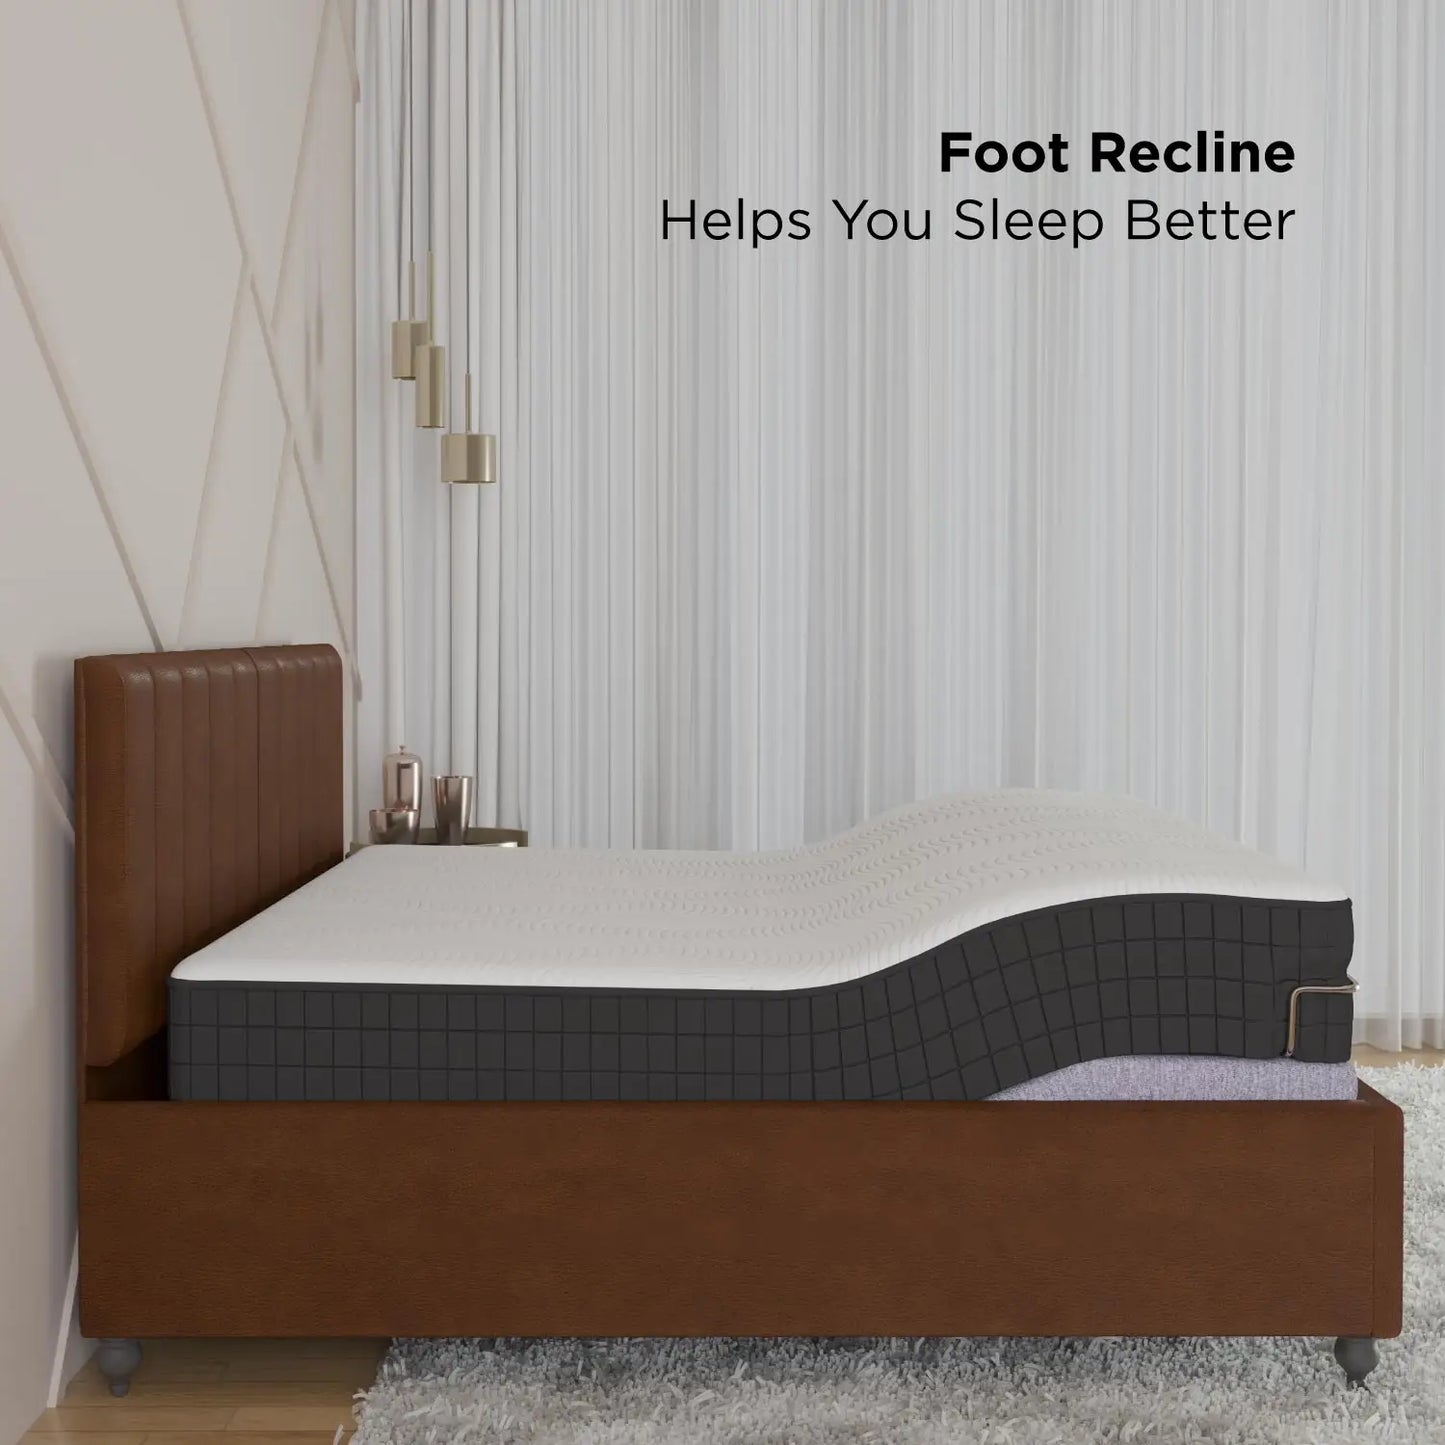 Foot Recline Helps You Sleep Better